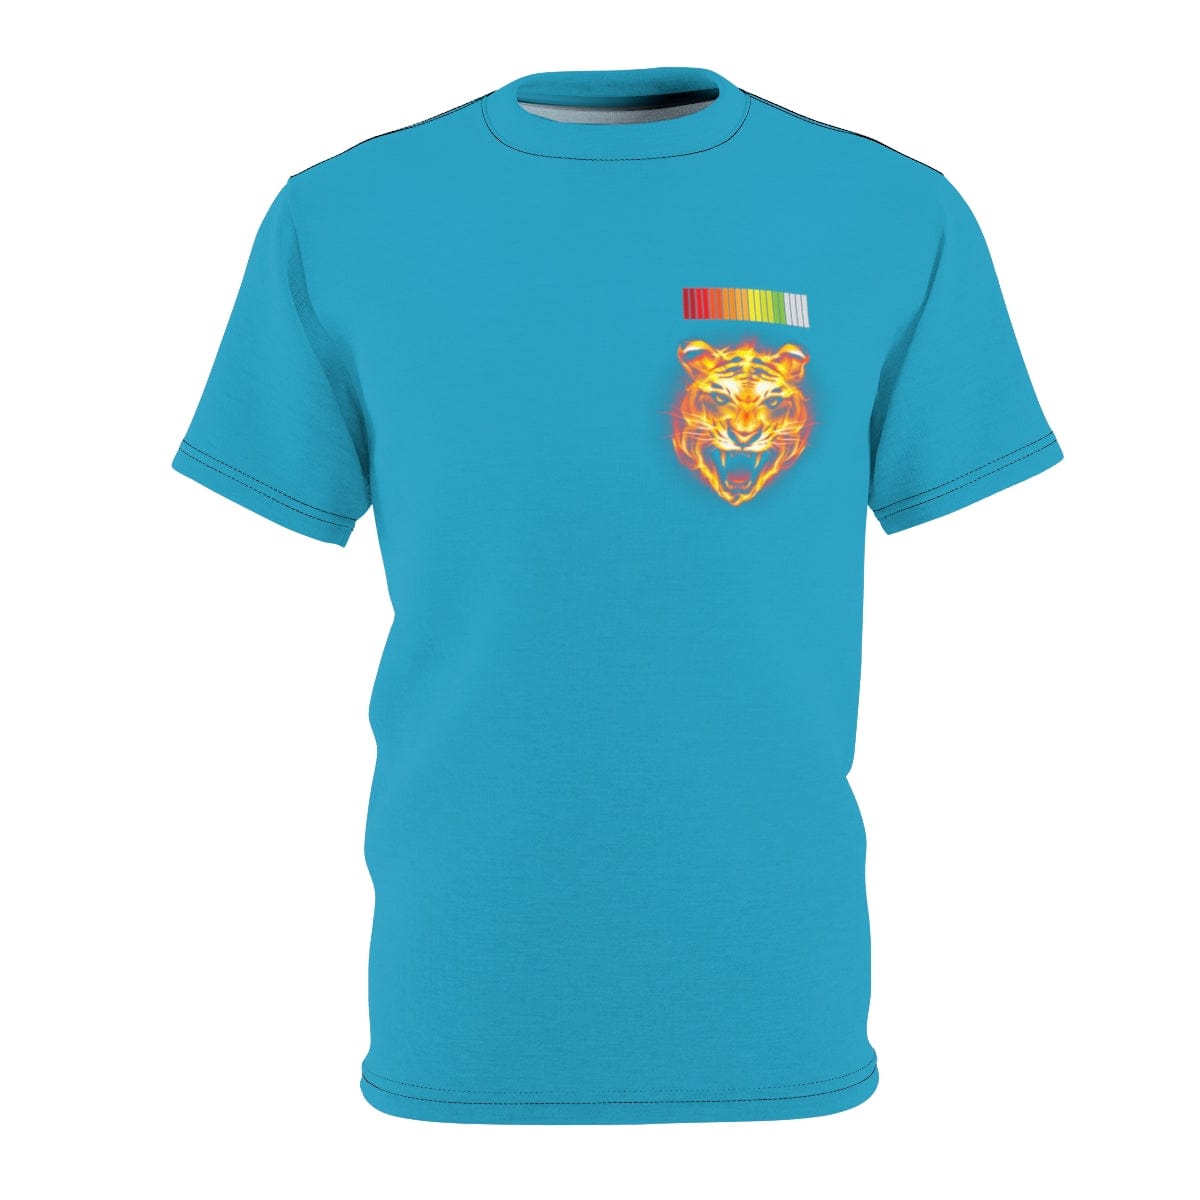 Celestial Tiger x Energy Life Bar Unisex T-Shirt | Aqua Blue | Exclusive Limited Edition By Gamer Fresh